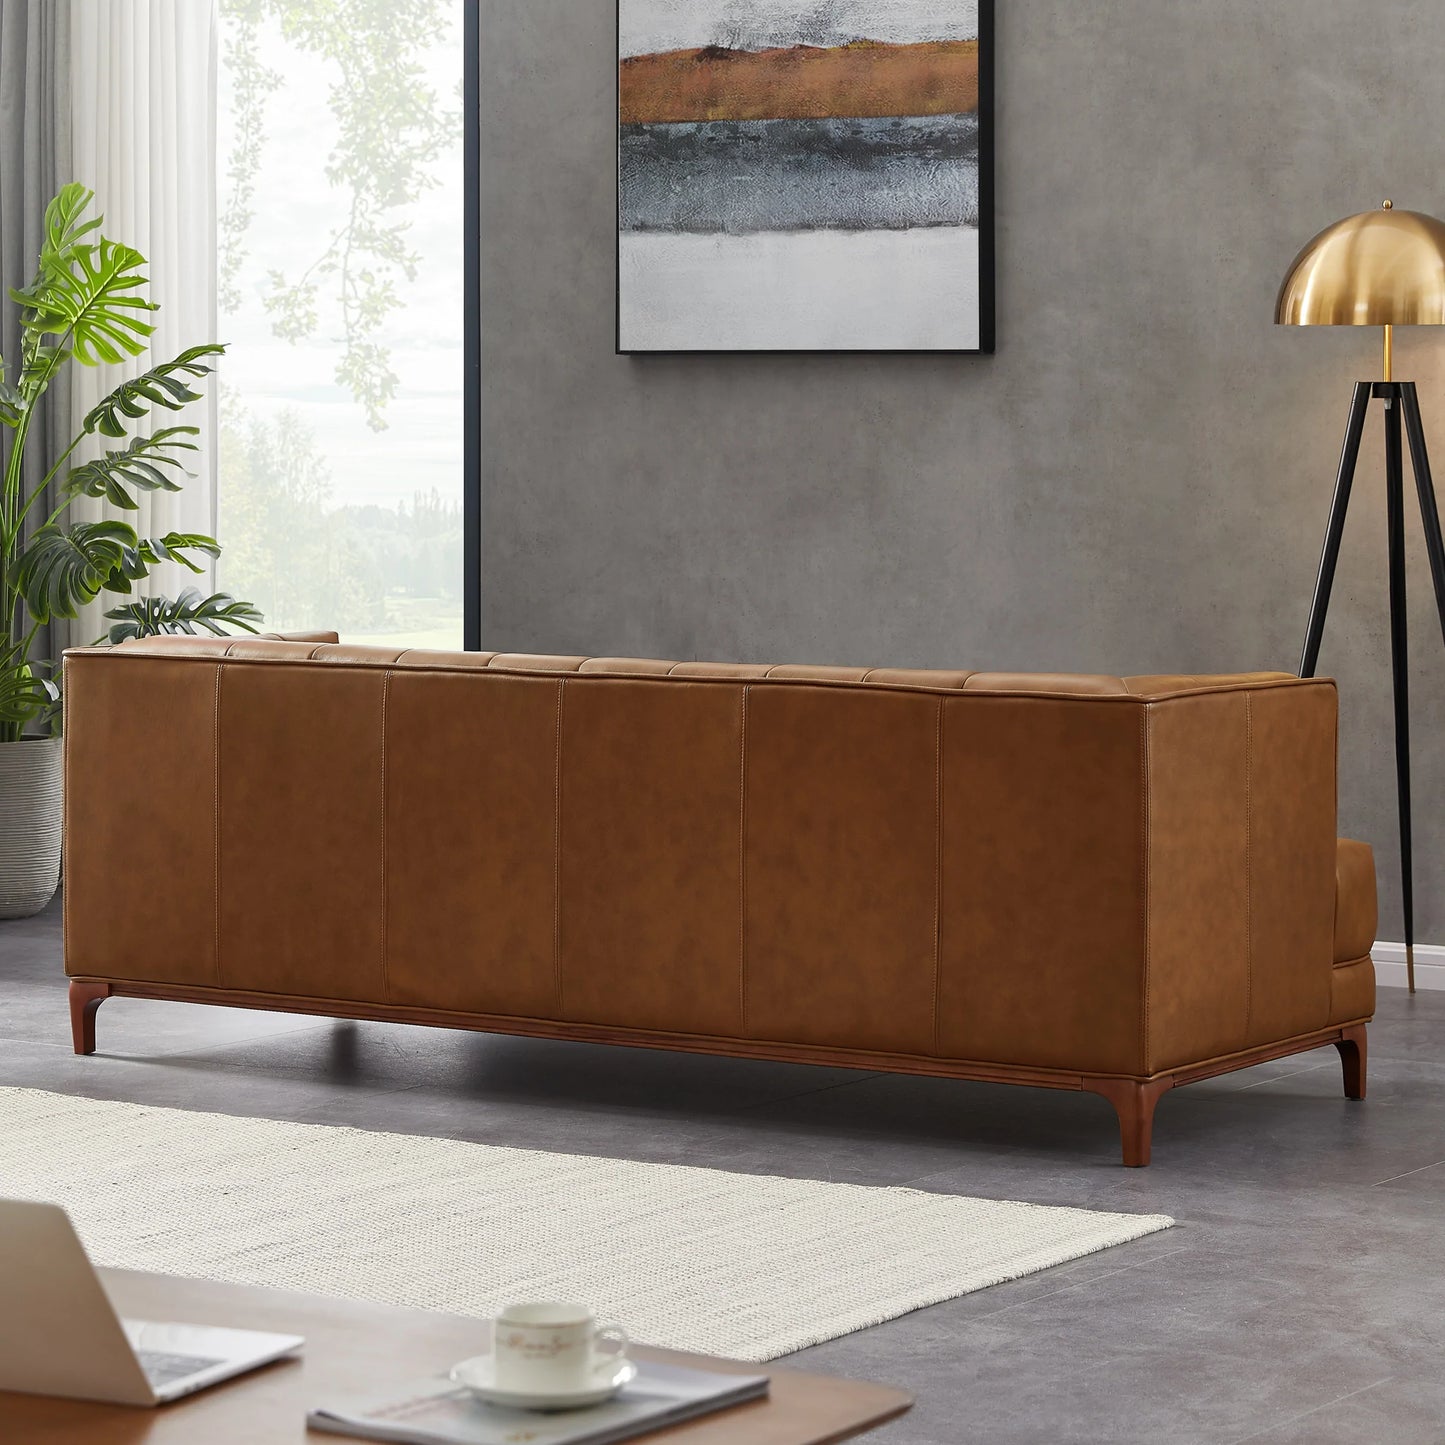 Kennedy Sofa (Cognac Leather)